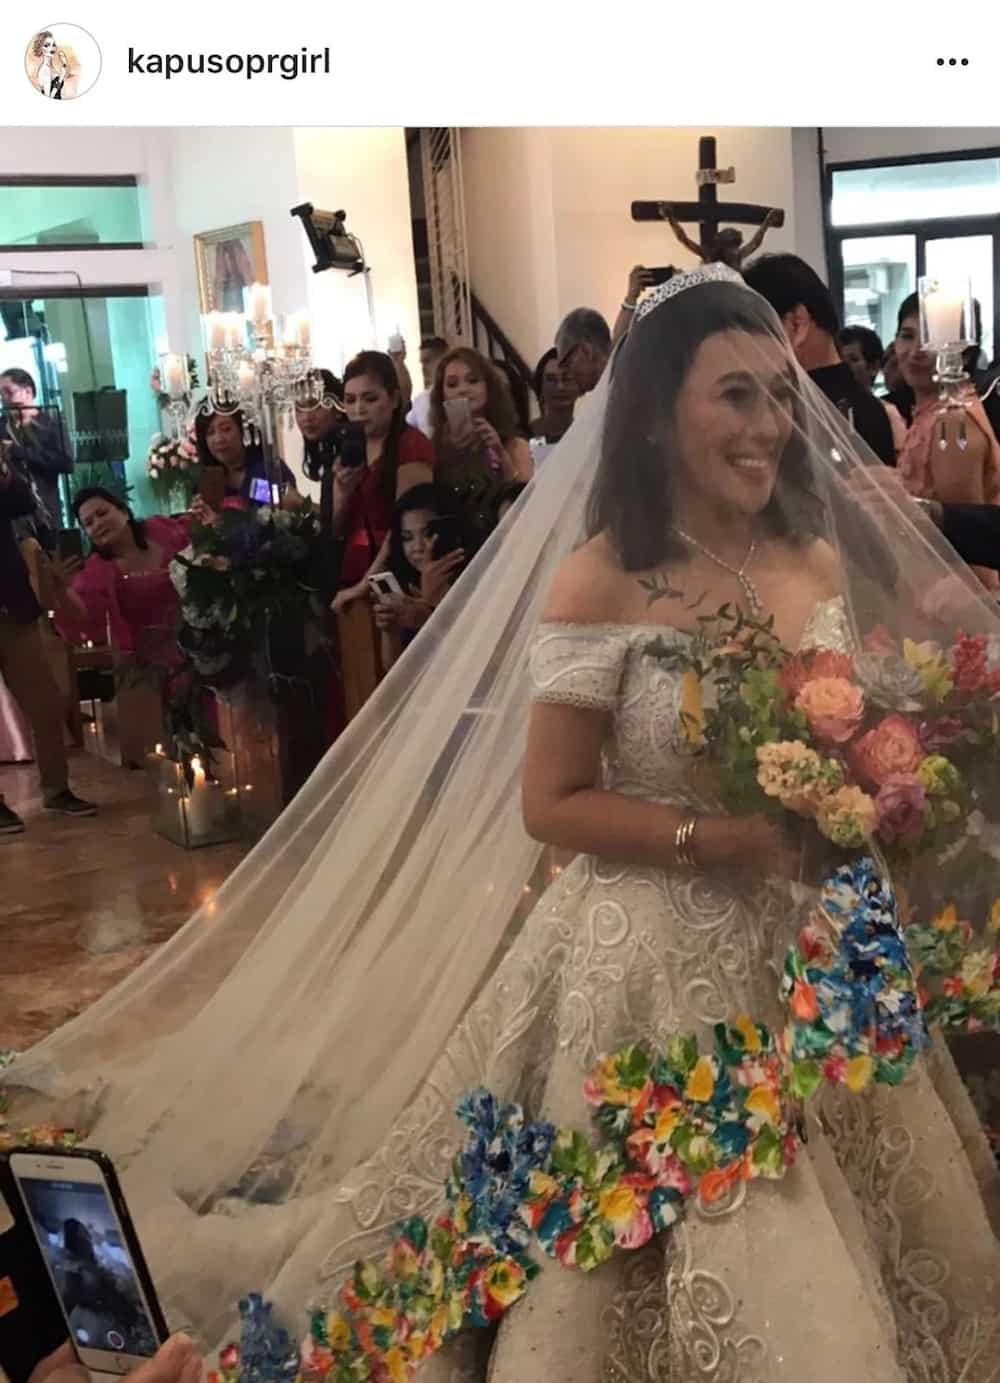 Photos & video from inside the church where Ai-Ai delas Alas & Gerald Sibayan got married go viral